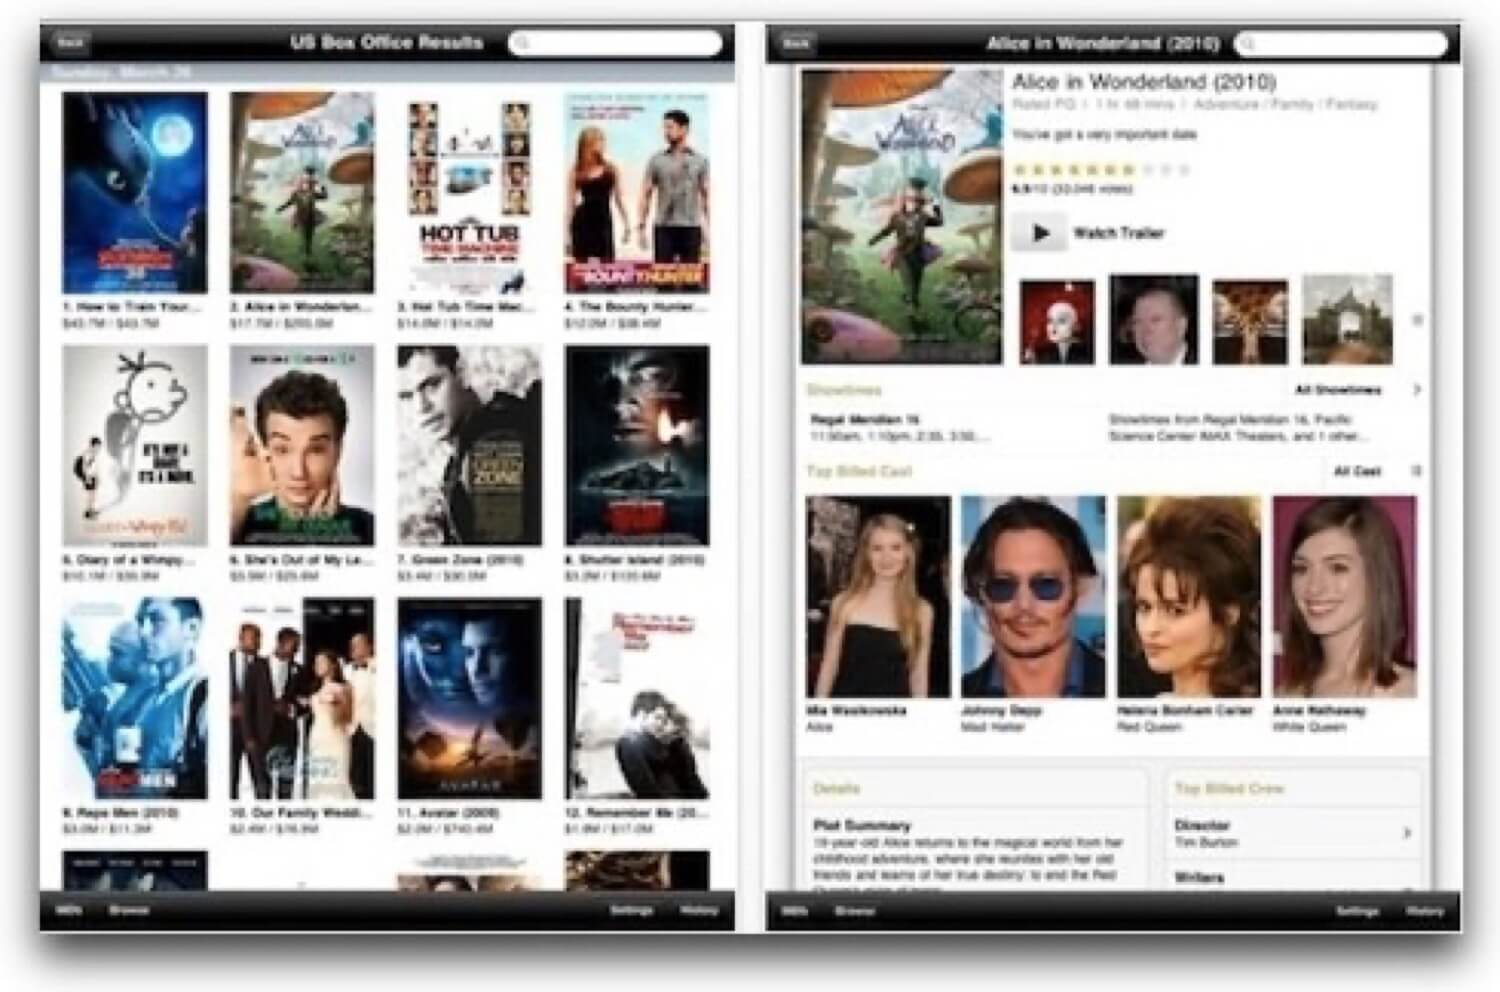 IMDB - how Apple’s iPhone or iPad interface makes ugly web site beautiful